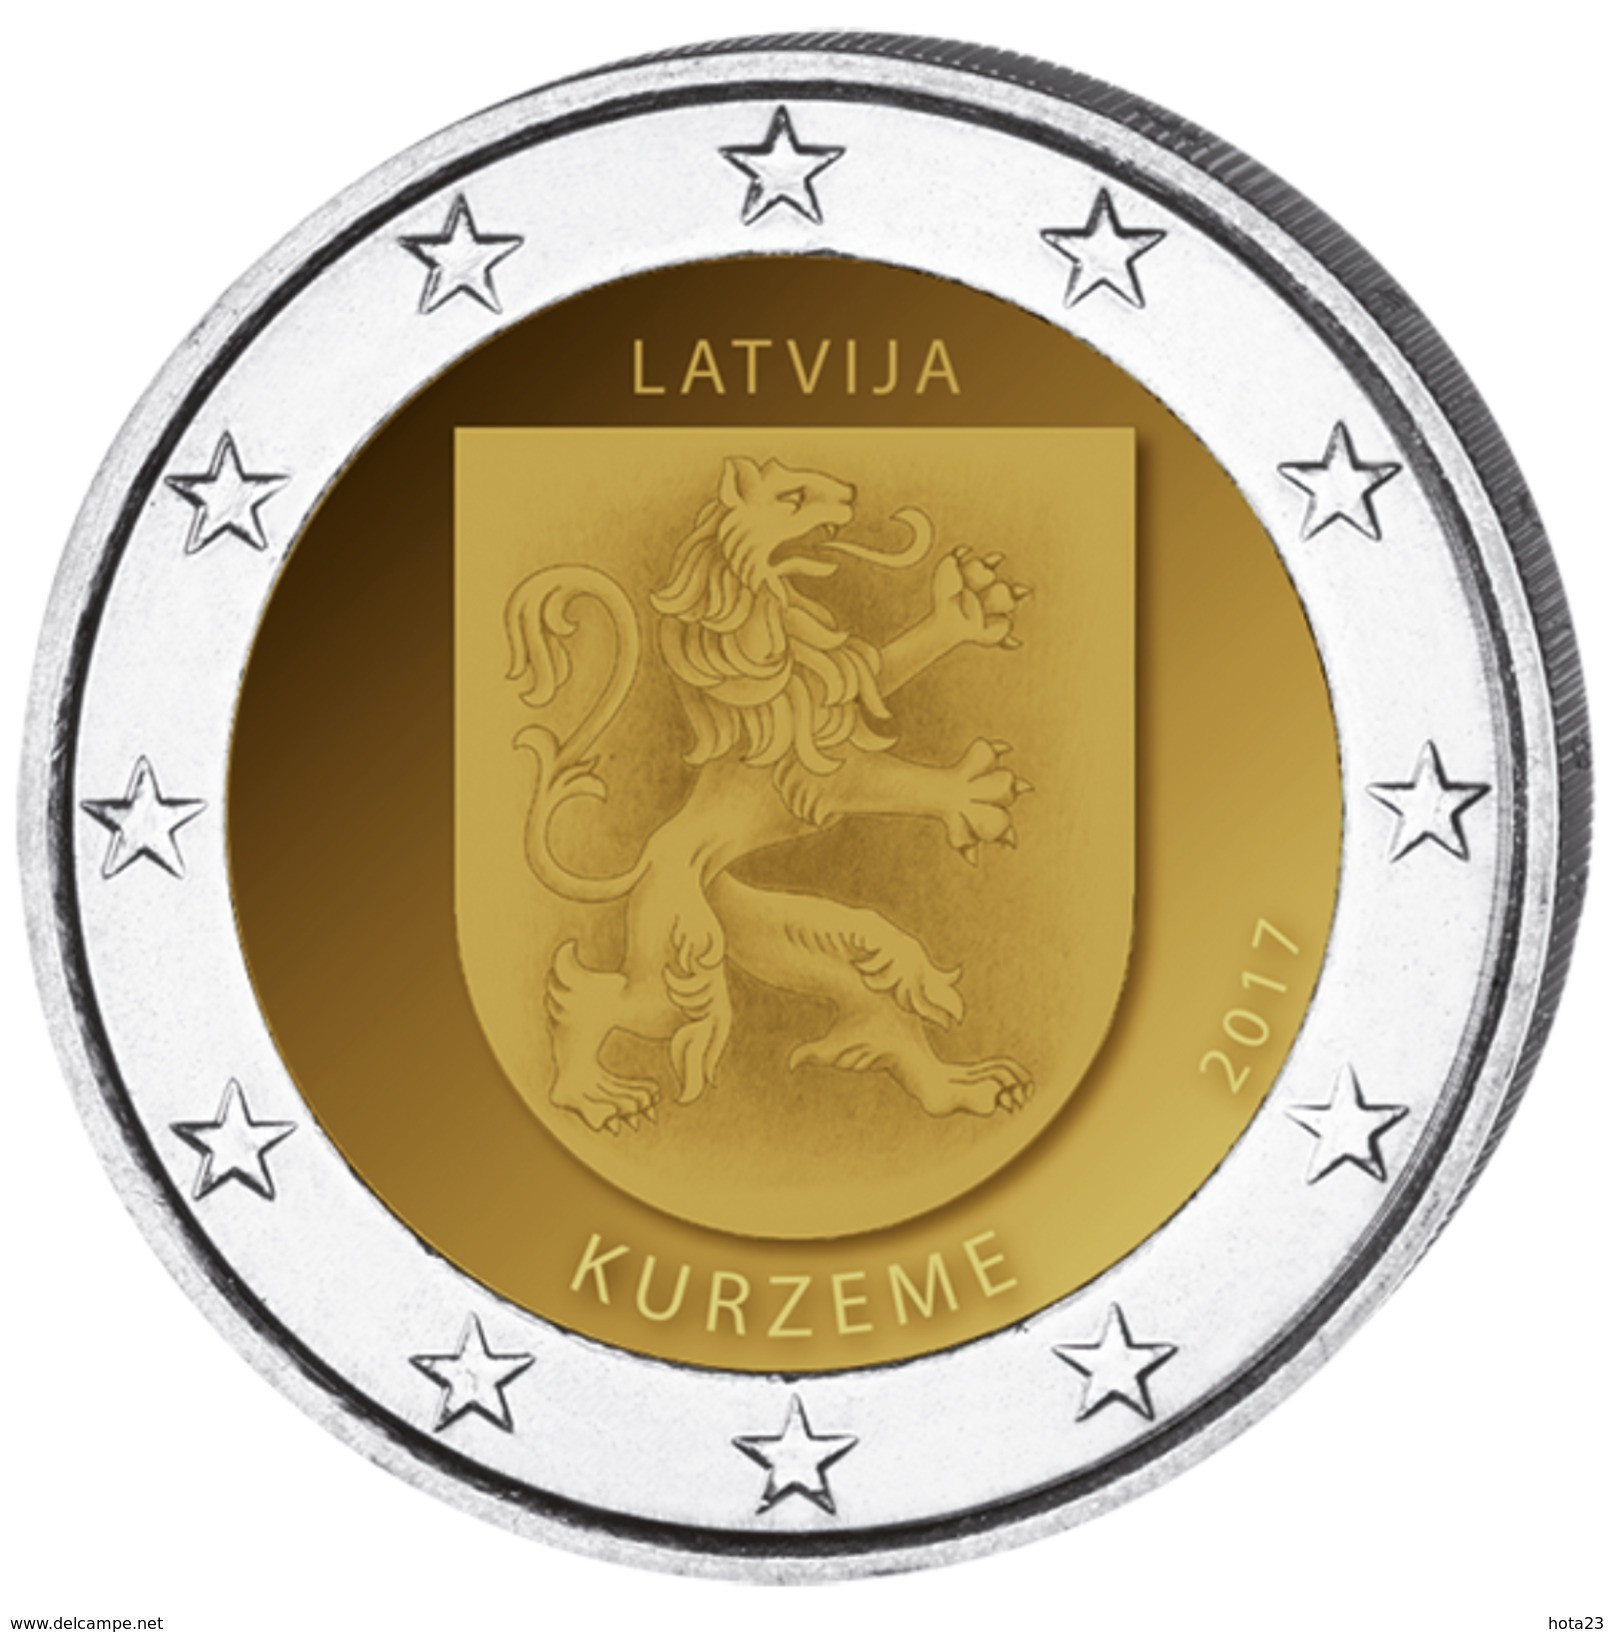 2 Euro COIN  Latvia 2017  Region  ~~ KURZEME KURLAND ~~ Commemorative Coin LETTLAND LETTONIA  UNC FROM  MINT ROLL - Latvia